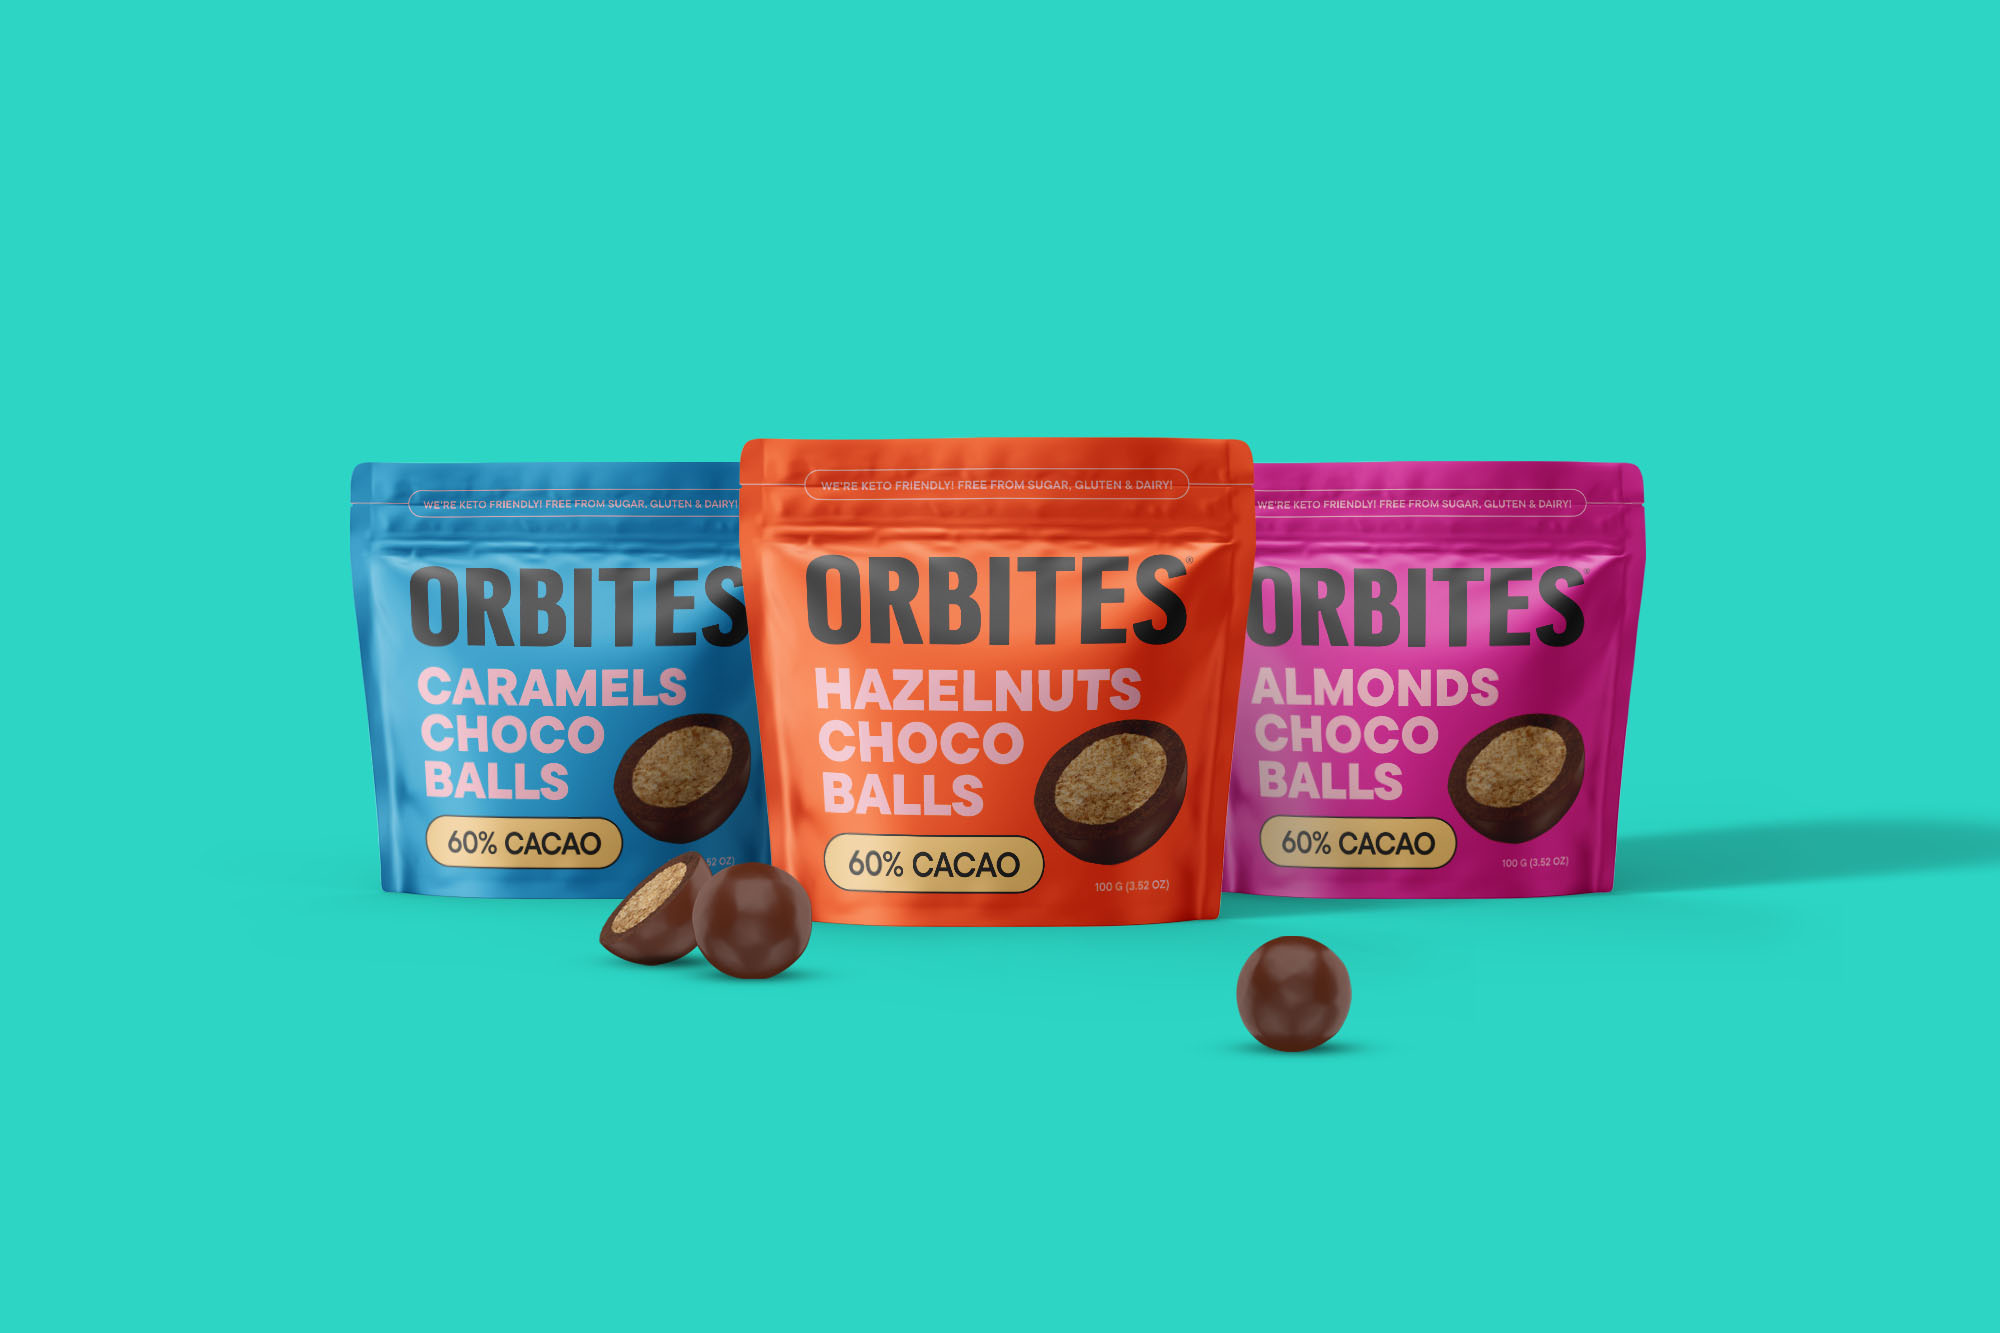 Orbites Chocolate Balls Branding and Packaging Design